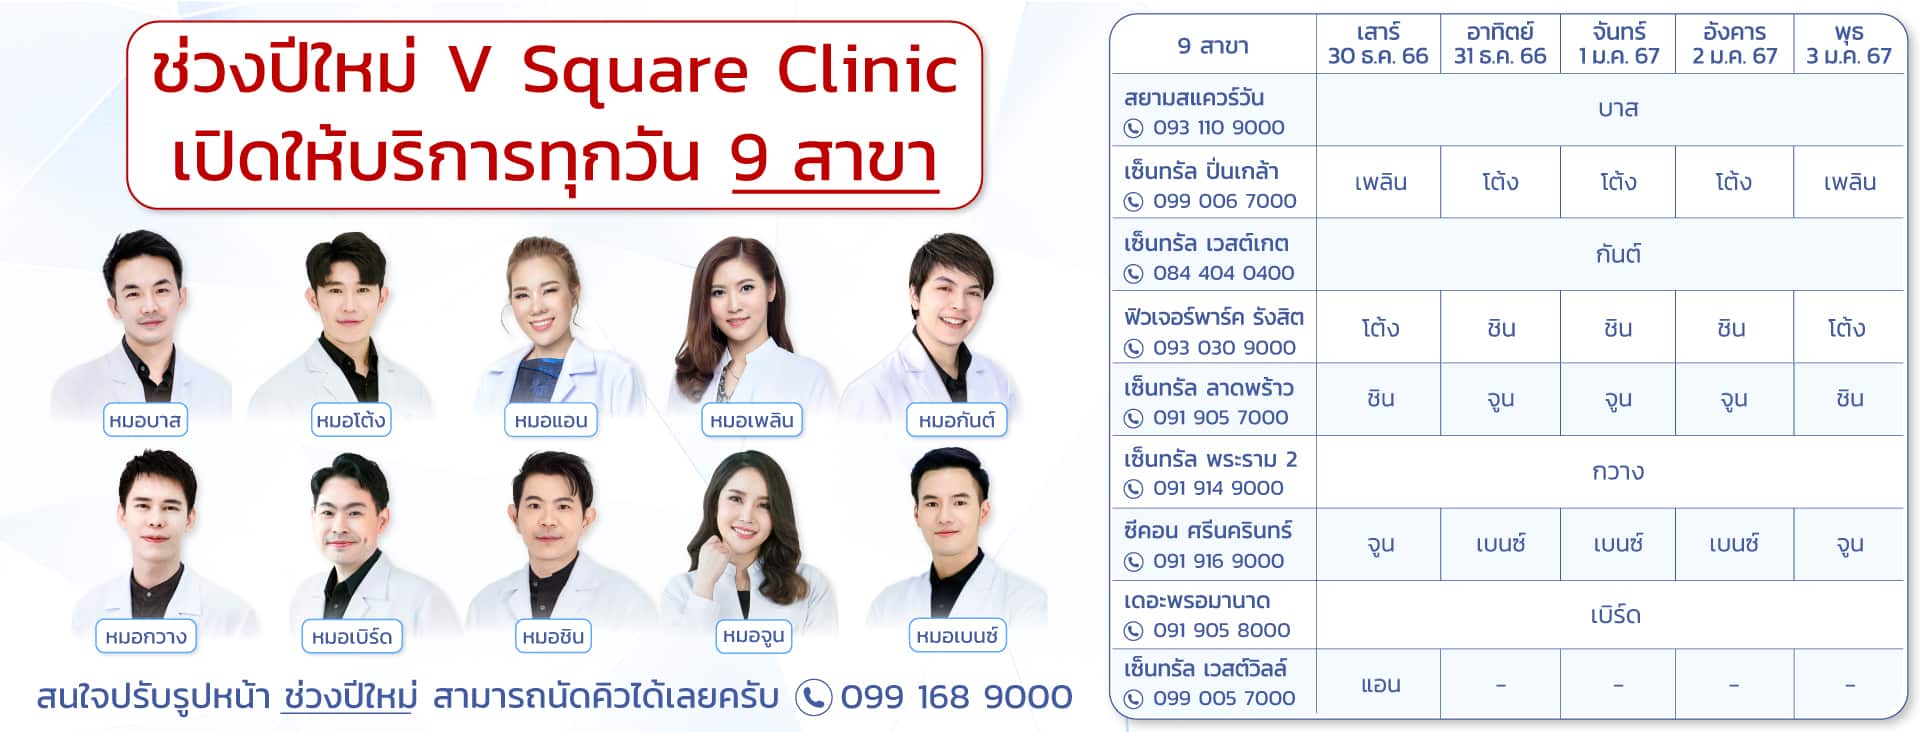 V Square Clinic แจ้งเปิดปิดปีใหม่